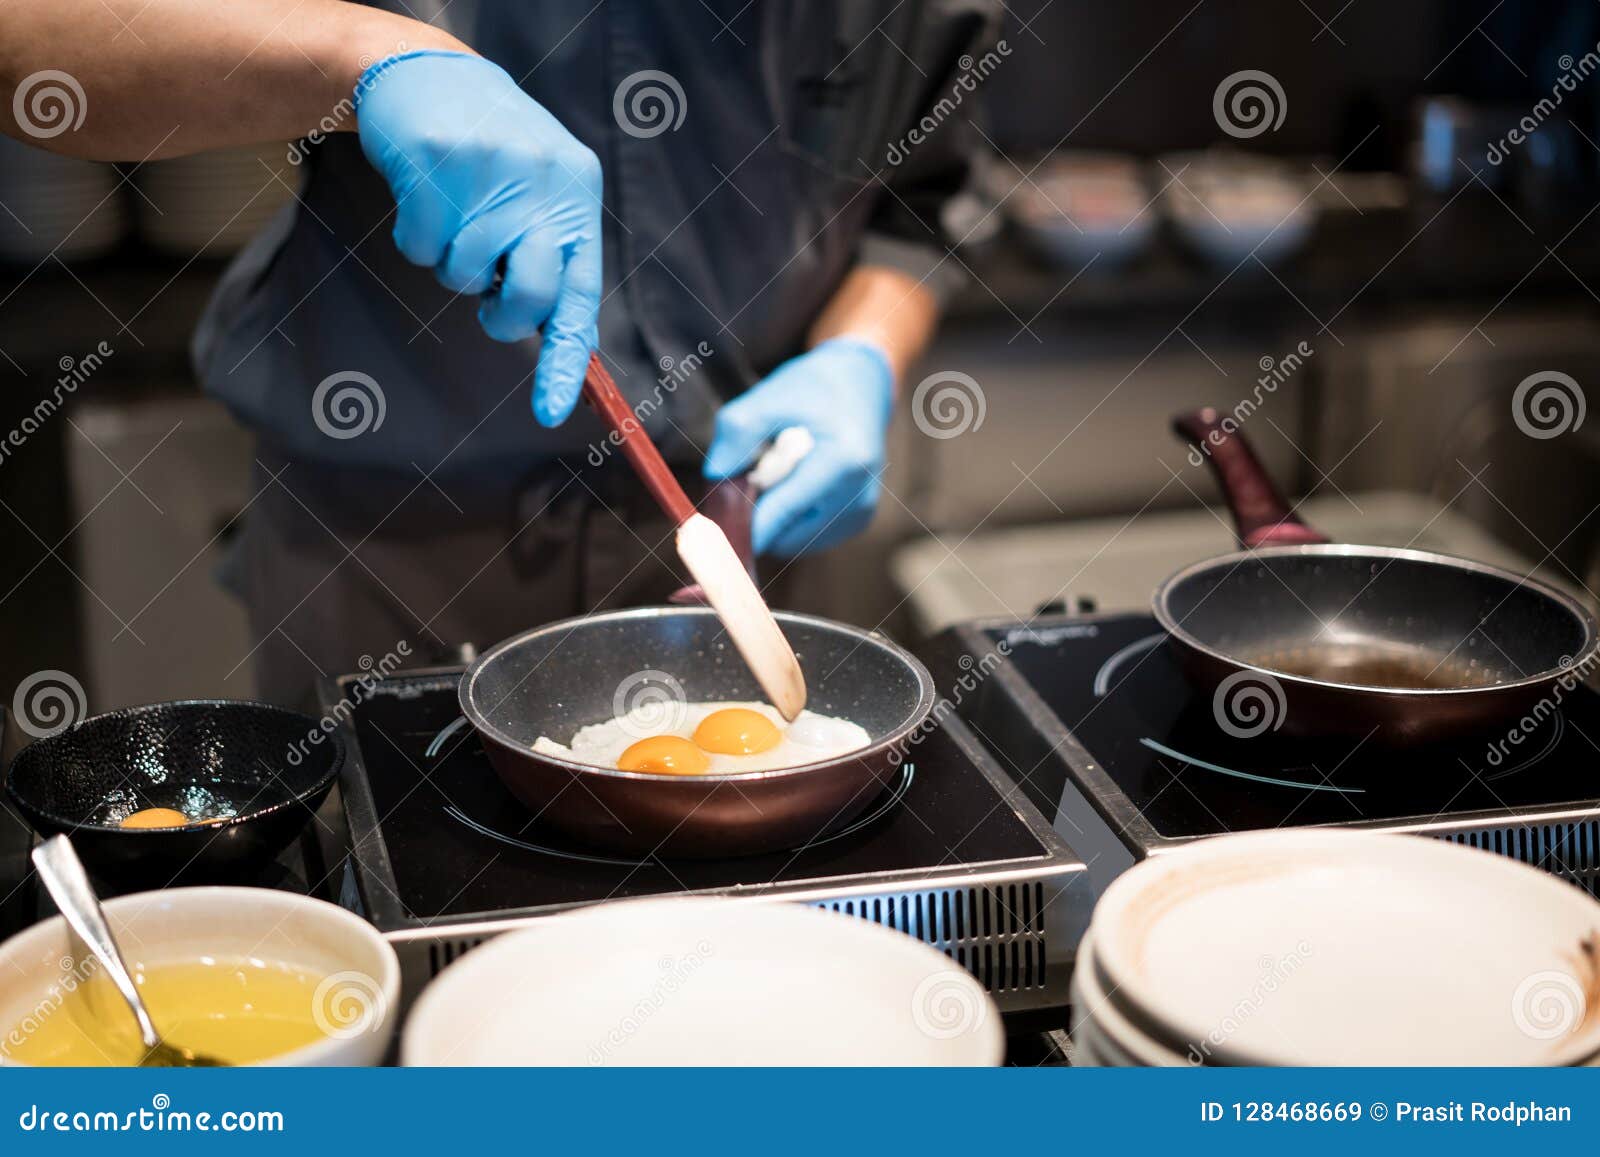 https://thumbs.dreamstime.com/z/hotel-chef-hands-gloves-cooking-fried-eggs-hot-pan-b-breakfast-restaurant-128468669.jpg